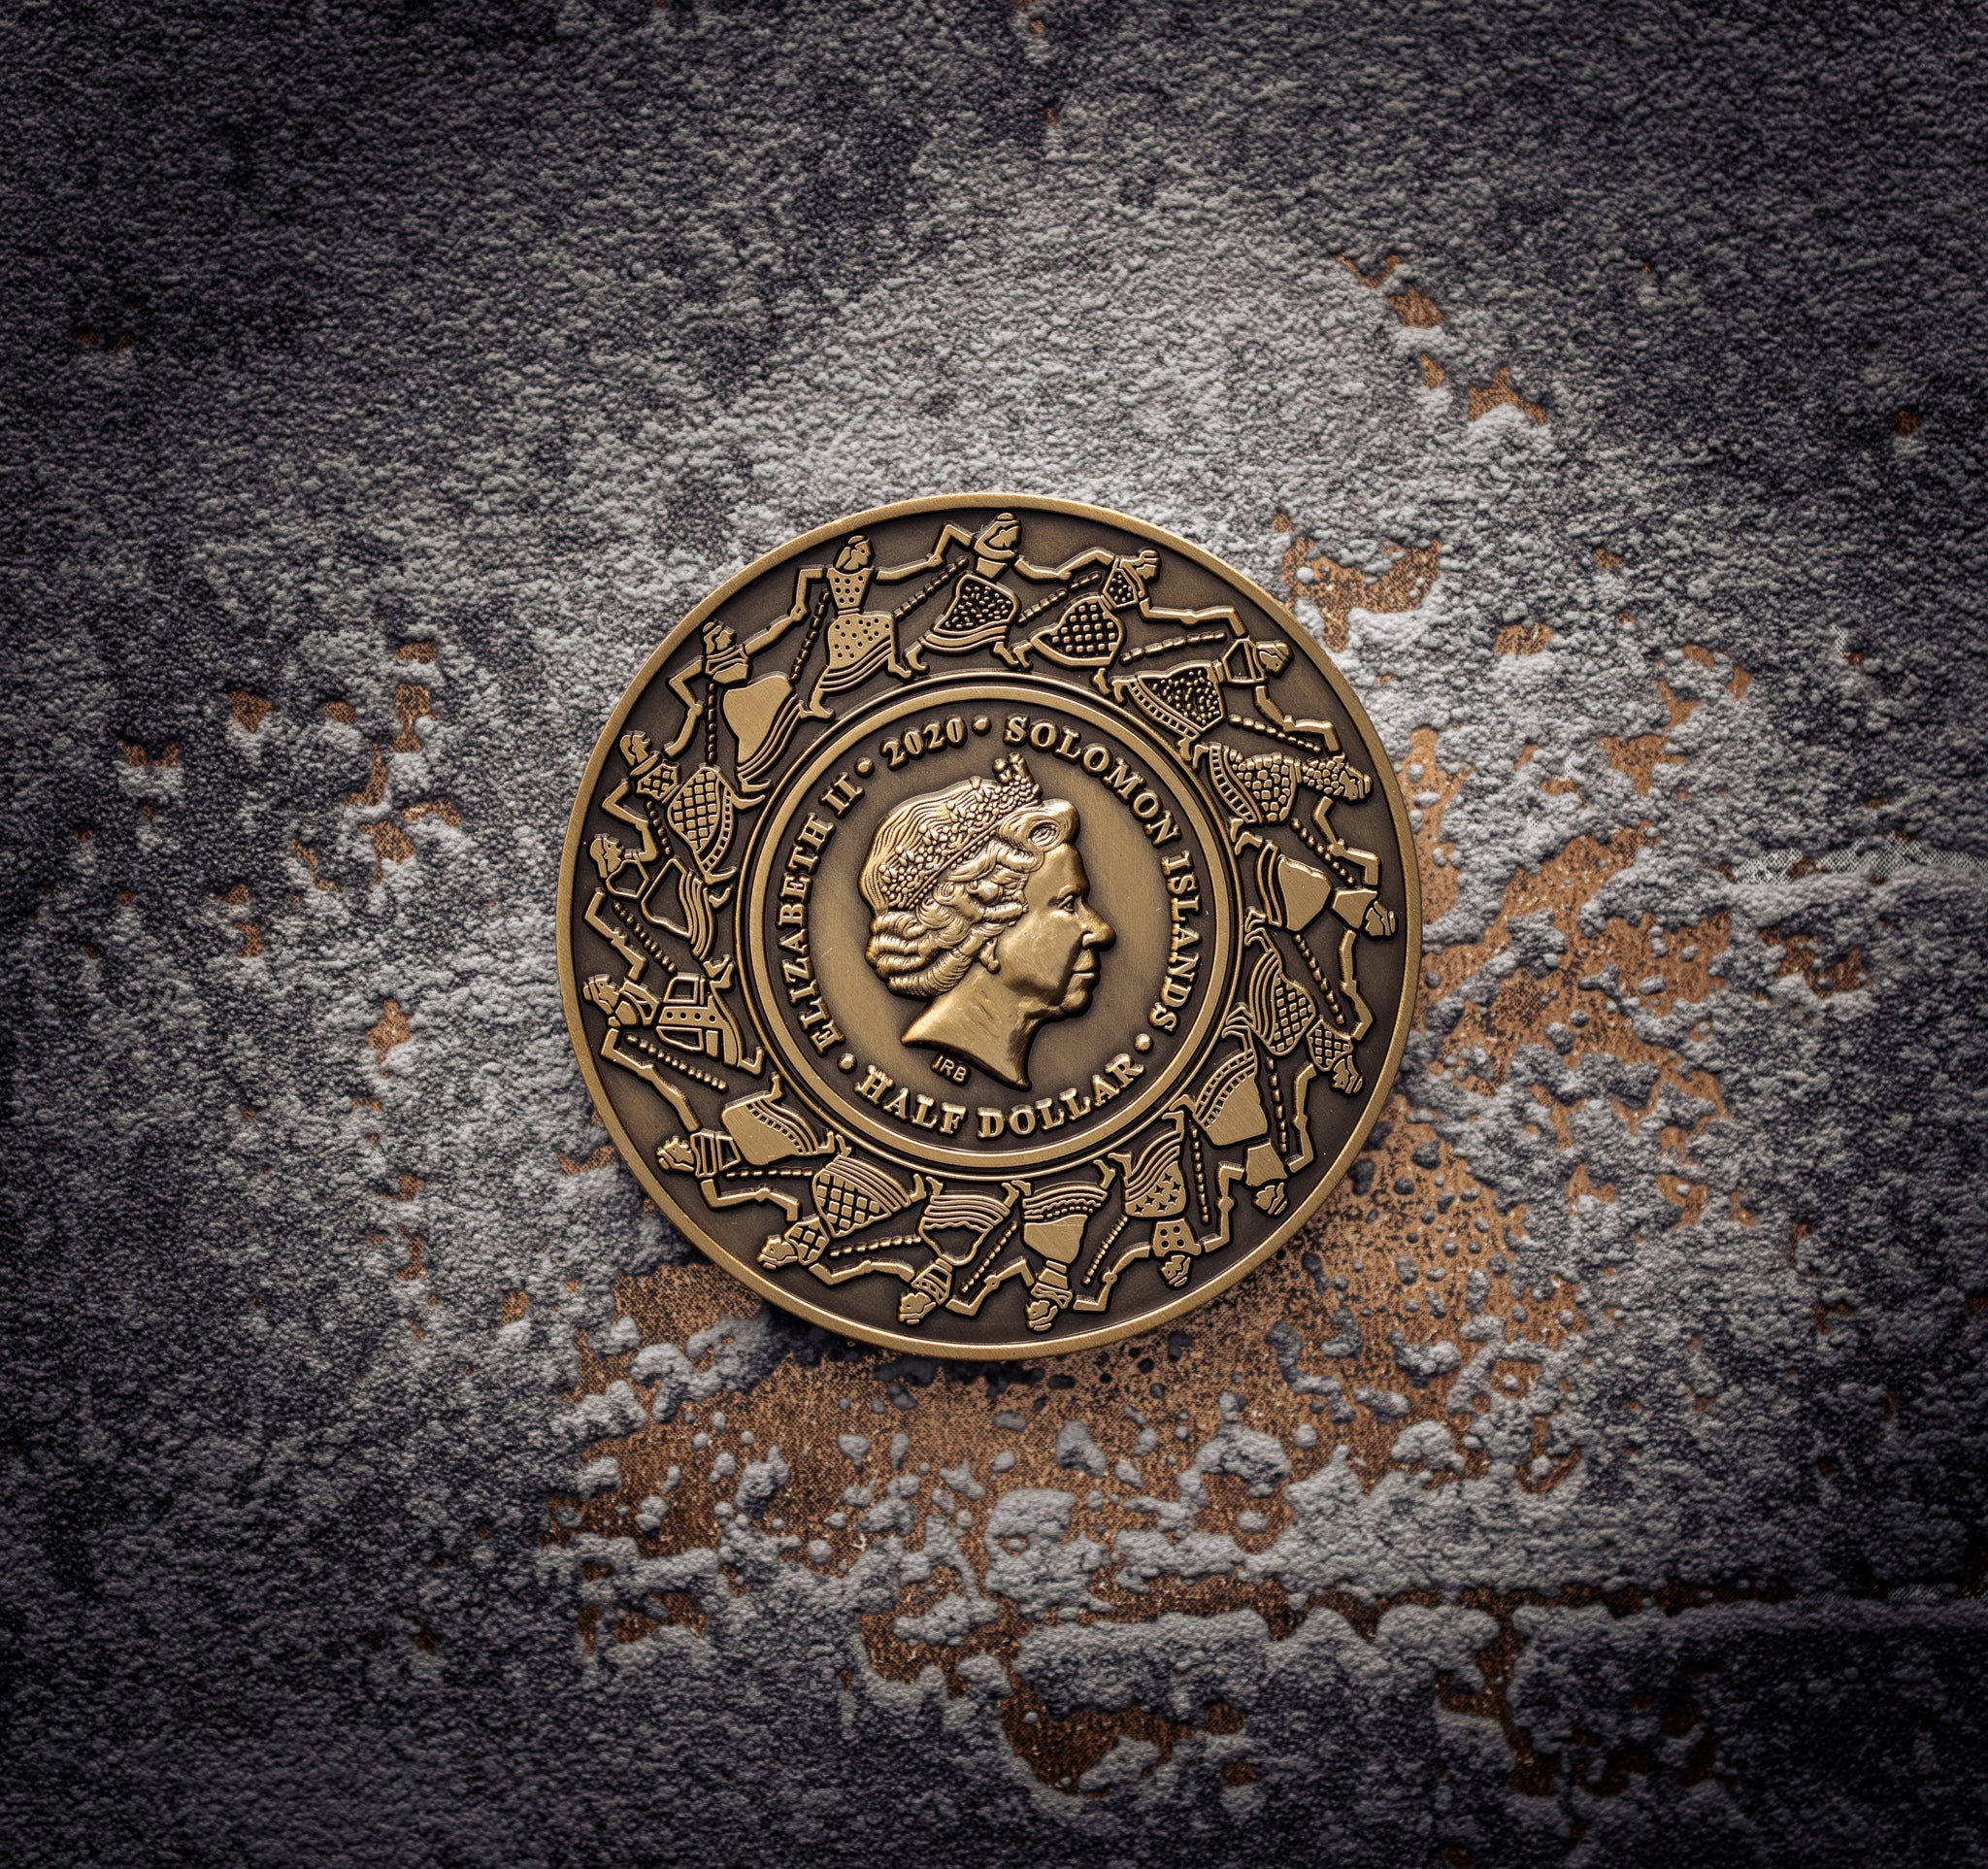 Troy - Achilles 55mm Coin